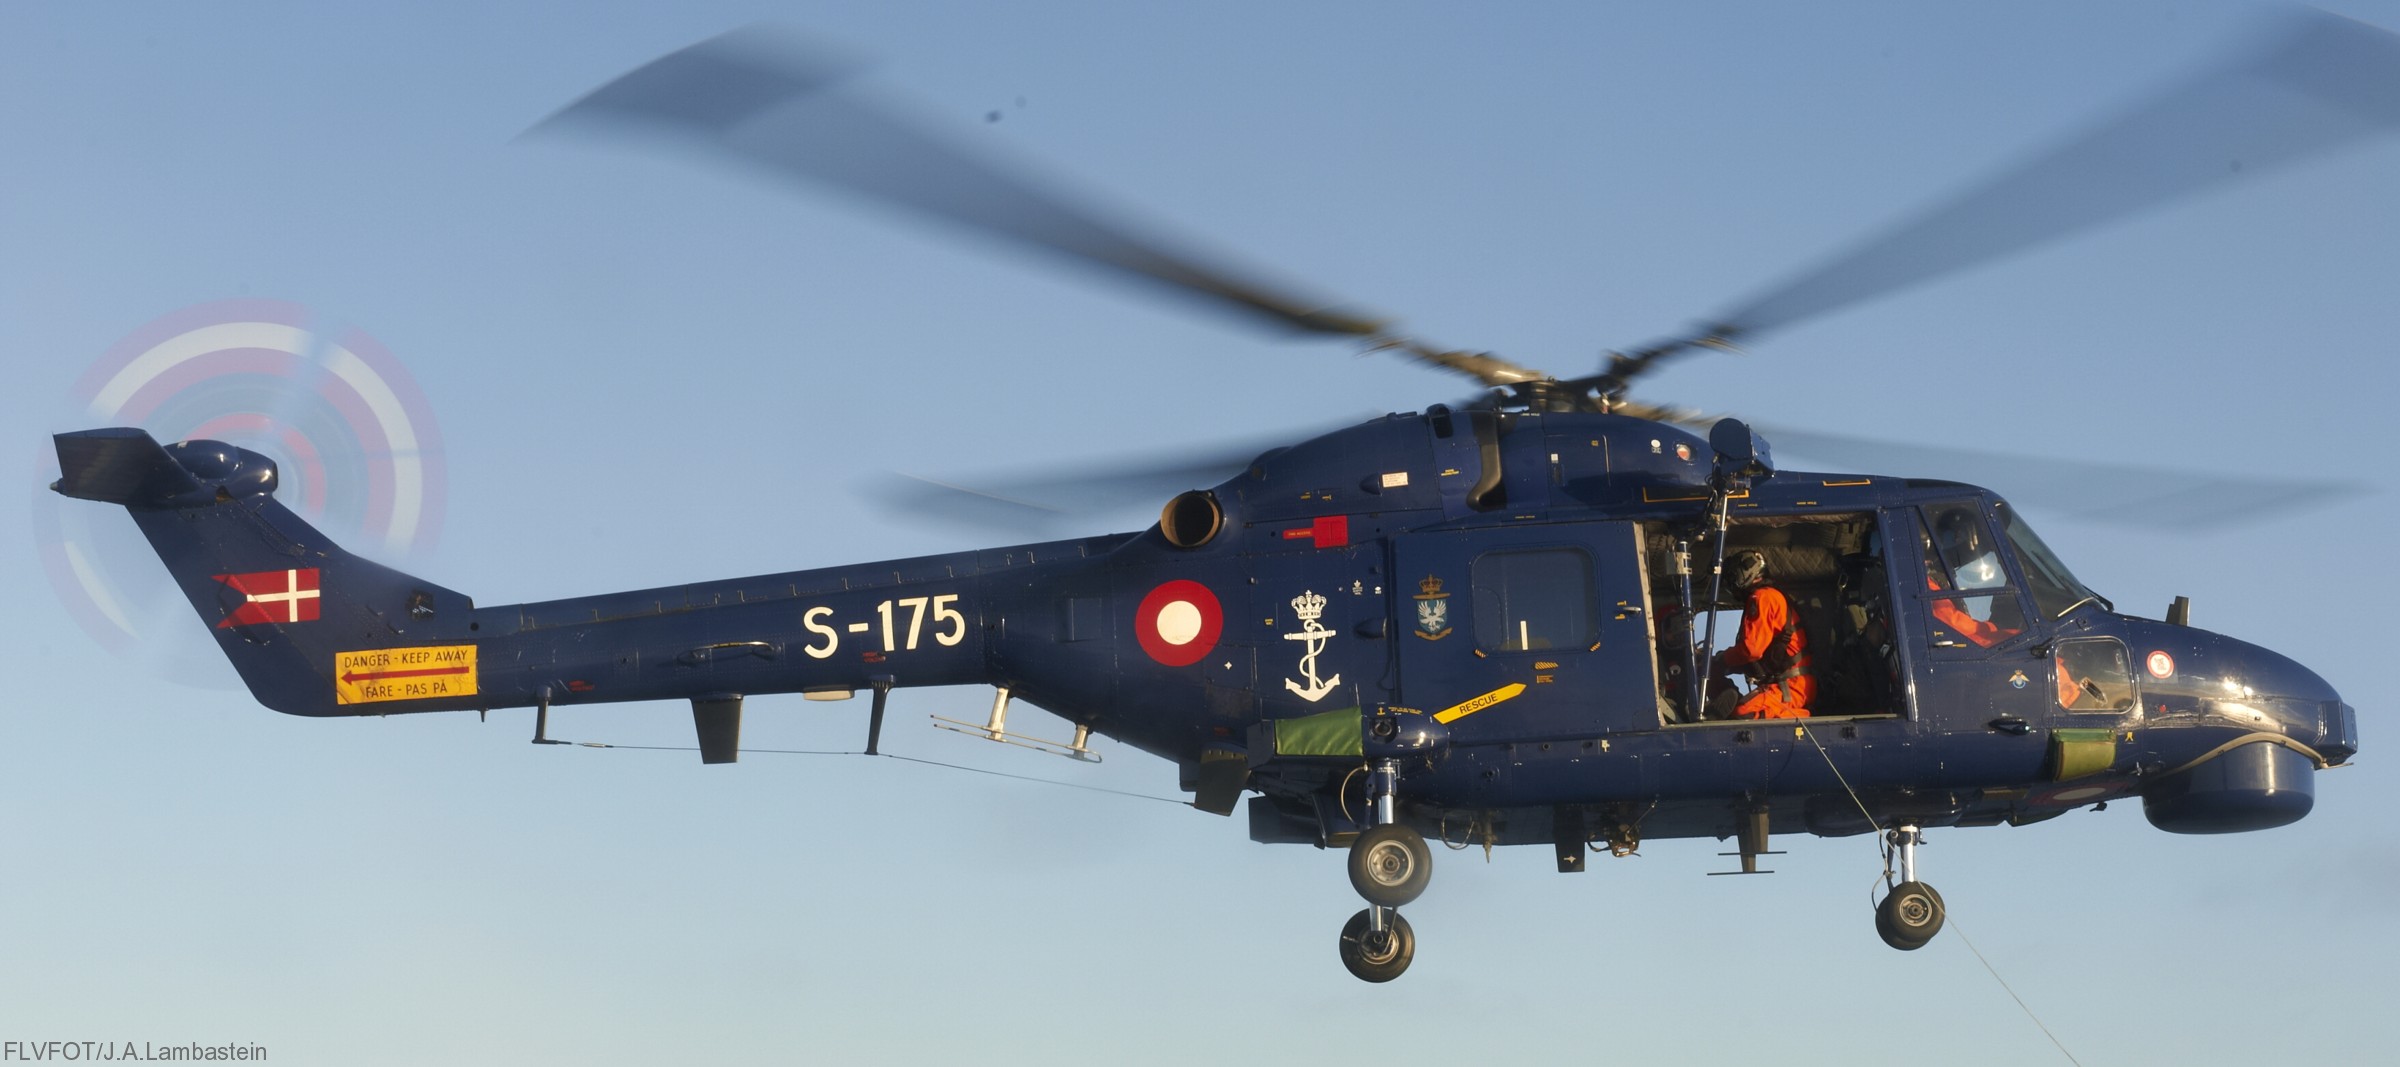 lynx mk.80 mk.90b helicopter westland royal danish navy air force kongelige danske marine flyvevabnet karup air base 15x